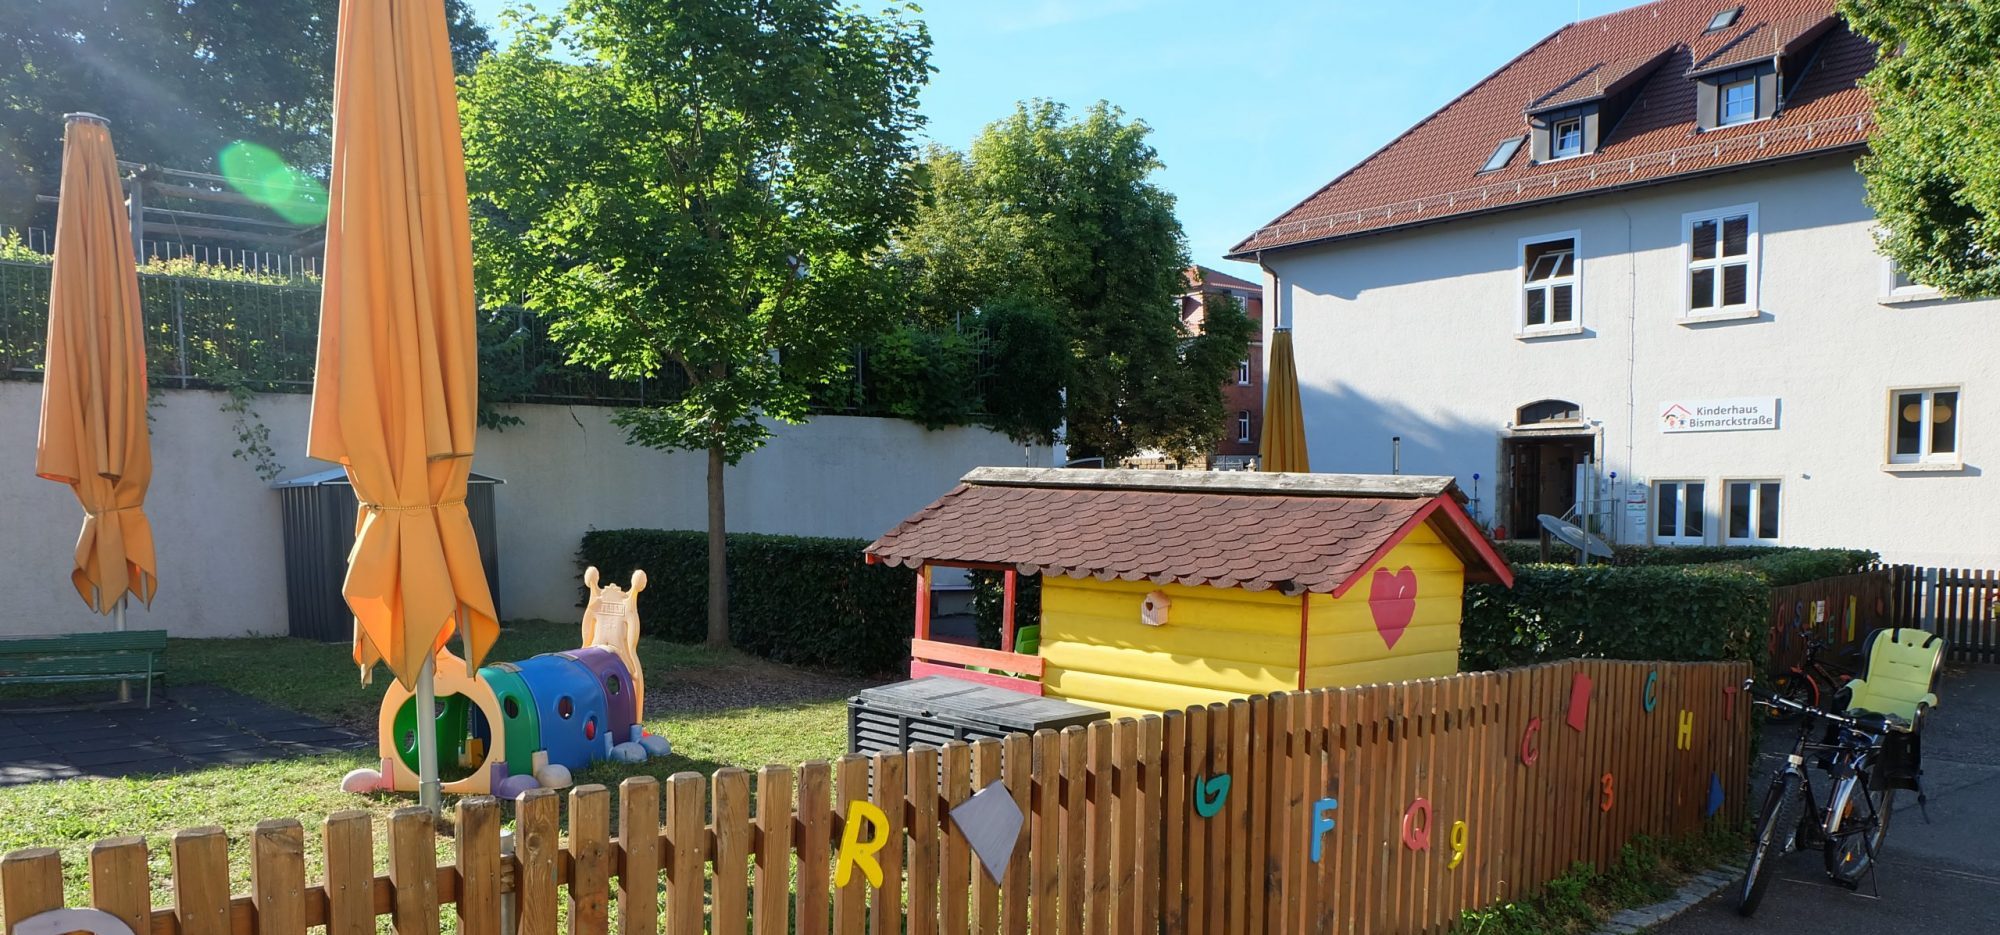 Unser Kinderhaus Bismarckstraße in Plochingen